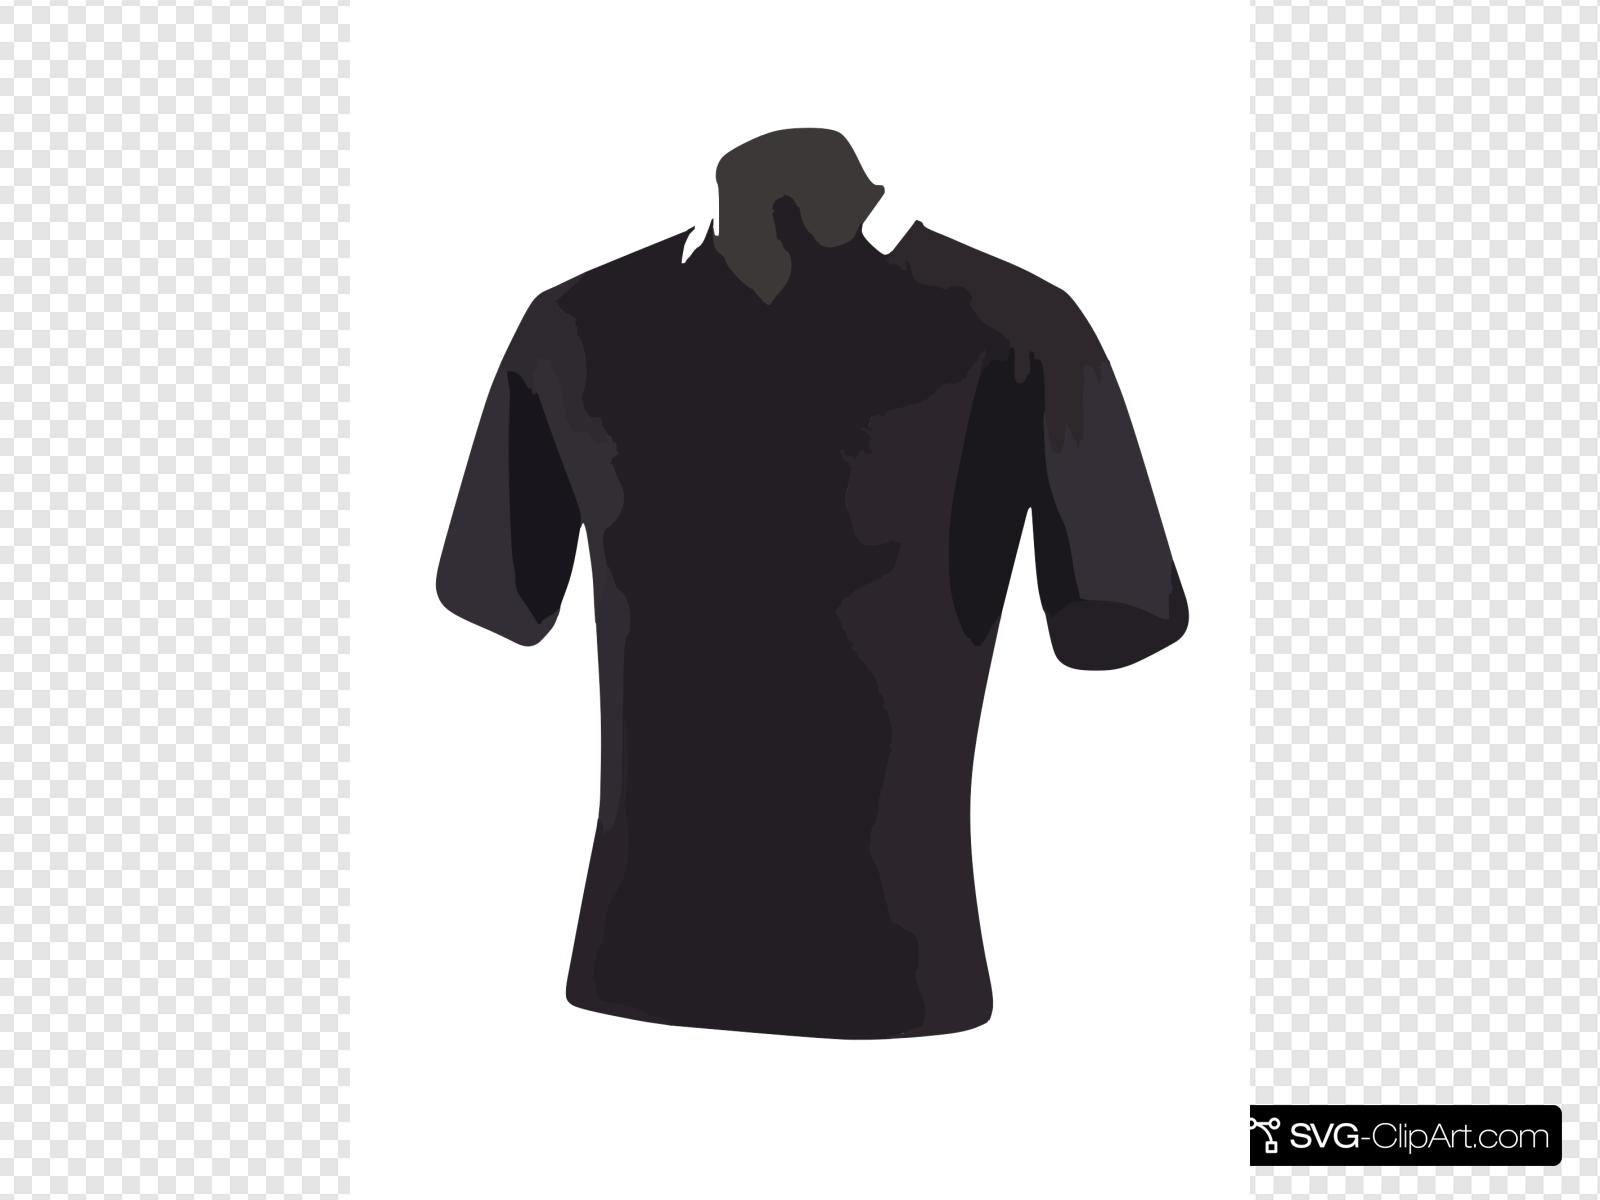 Black Polo Shirt Clip art, Icon and SVG.